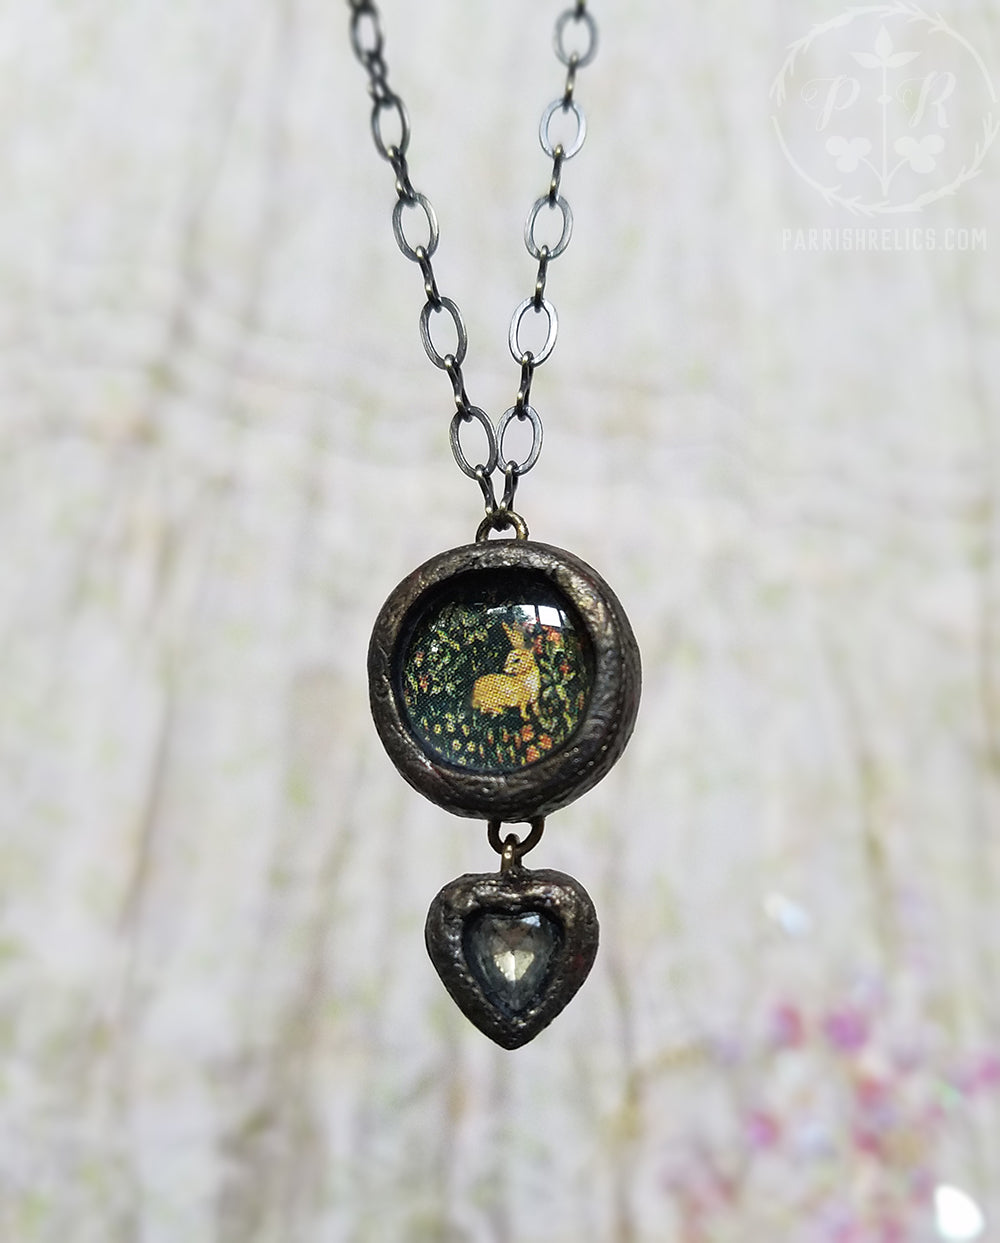 Millefleur Tapestry Rabbit & Vintage Glass Heart ~ Pictorial Shrine Amulet